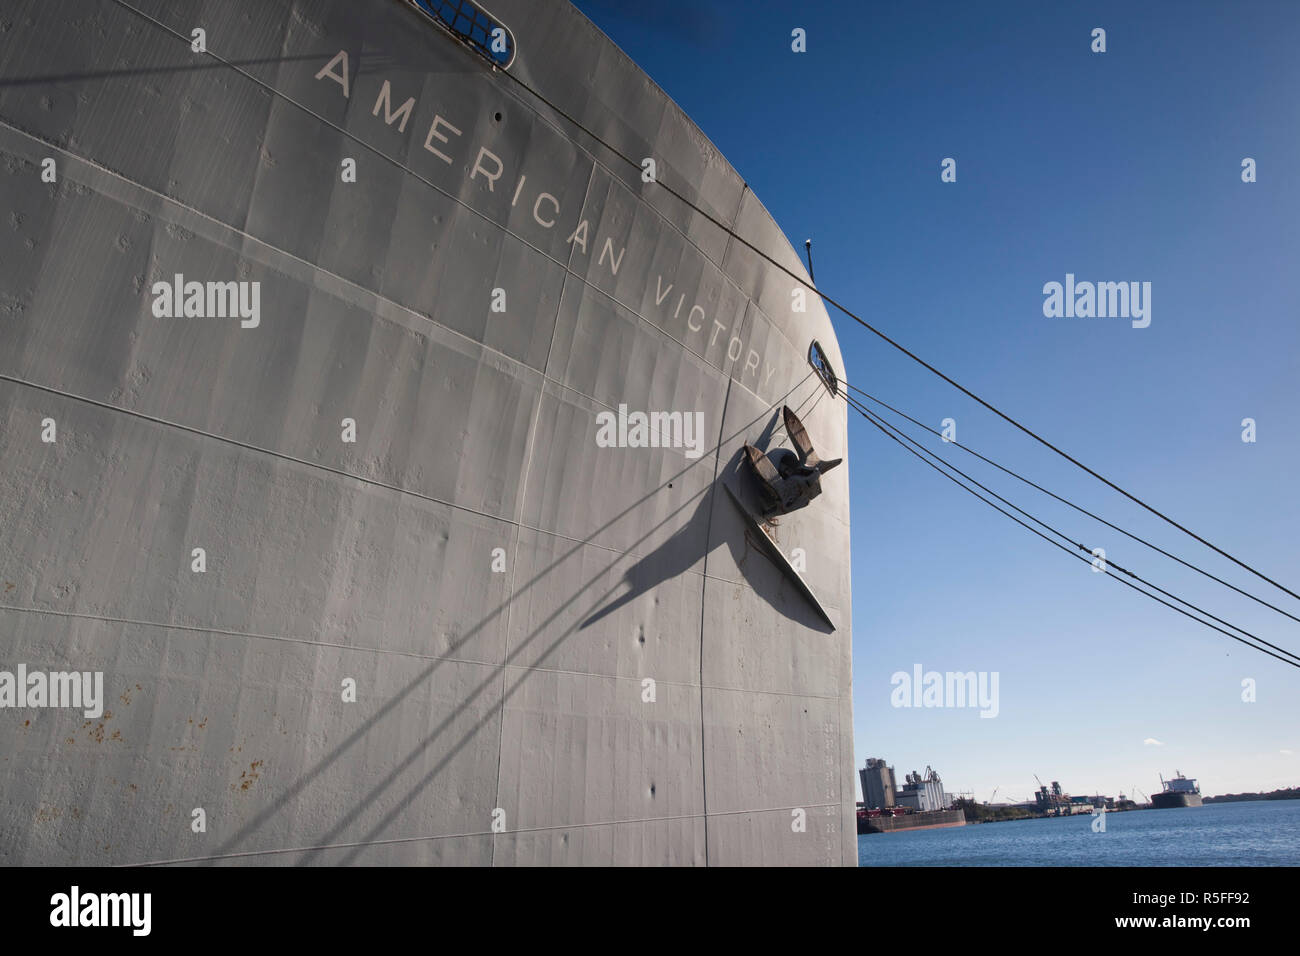 USA, Florida, Tampa, Port of Tampa, World War 2-era Liberty Ship, American Victory Stock Photo